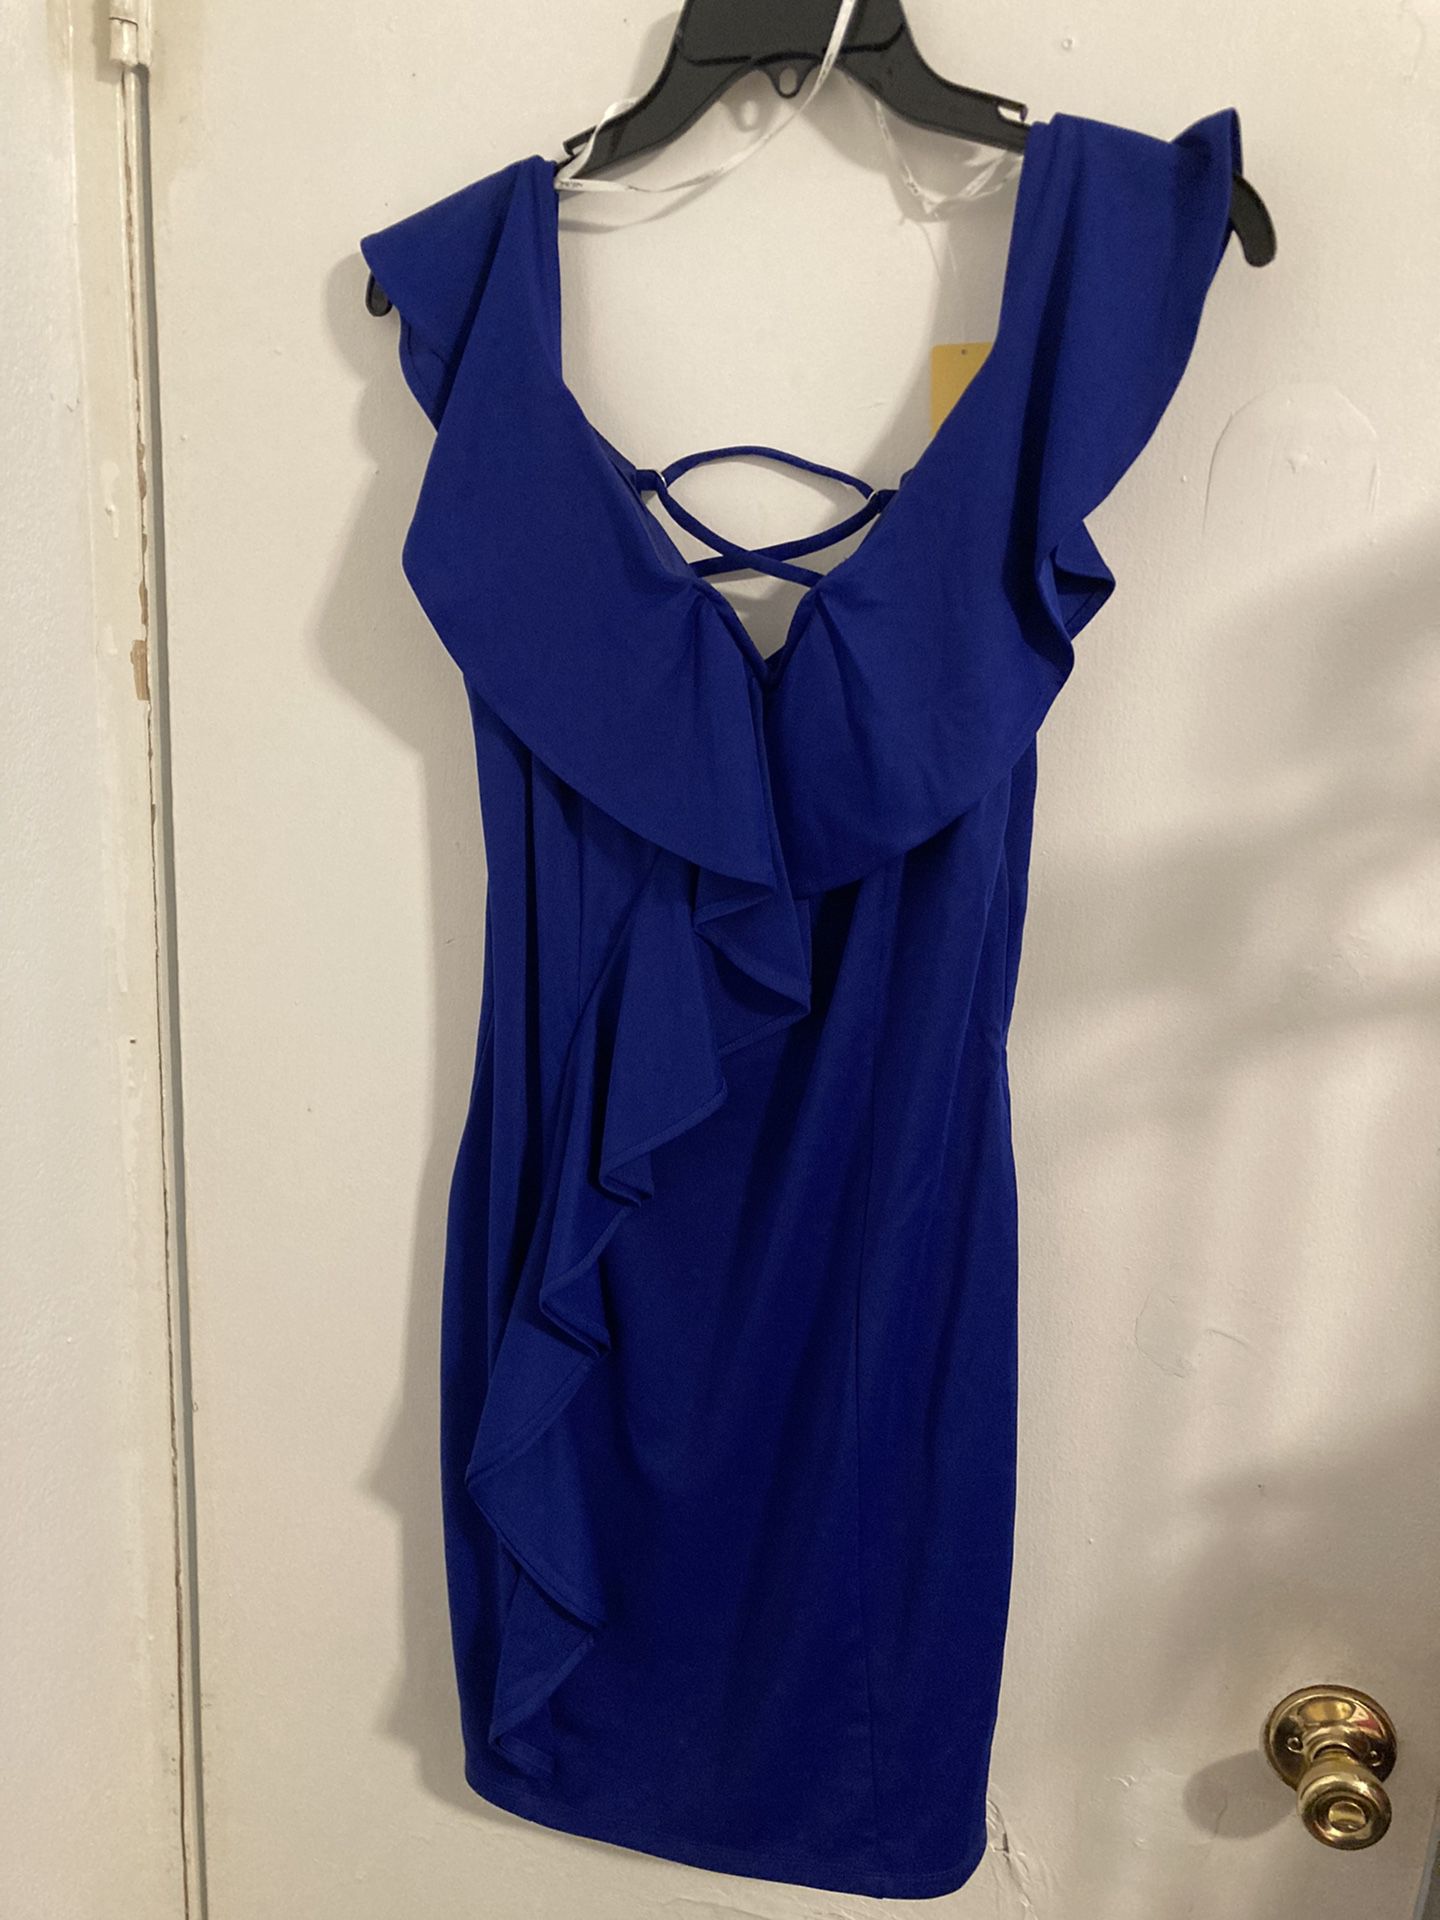 Brand New Royal Blue Fashion Dress Size Medium 